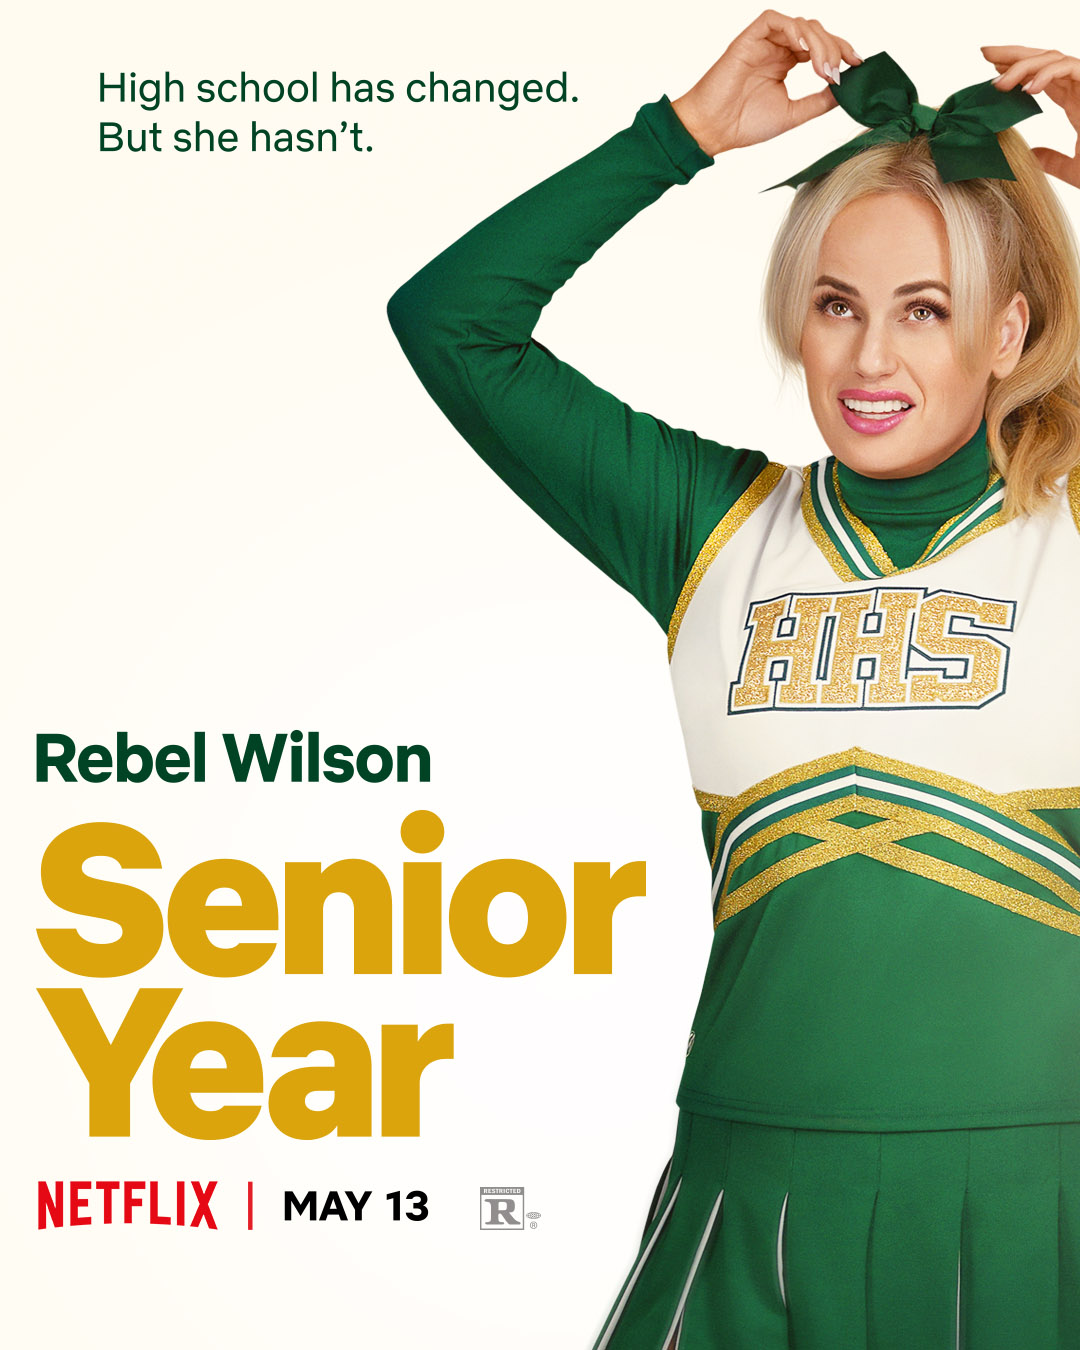 Watch the Trailer for Netflix’s “Senior Year” starring Rebel Wilson